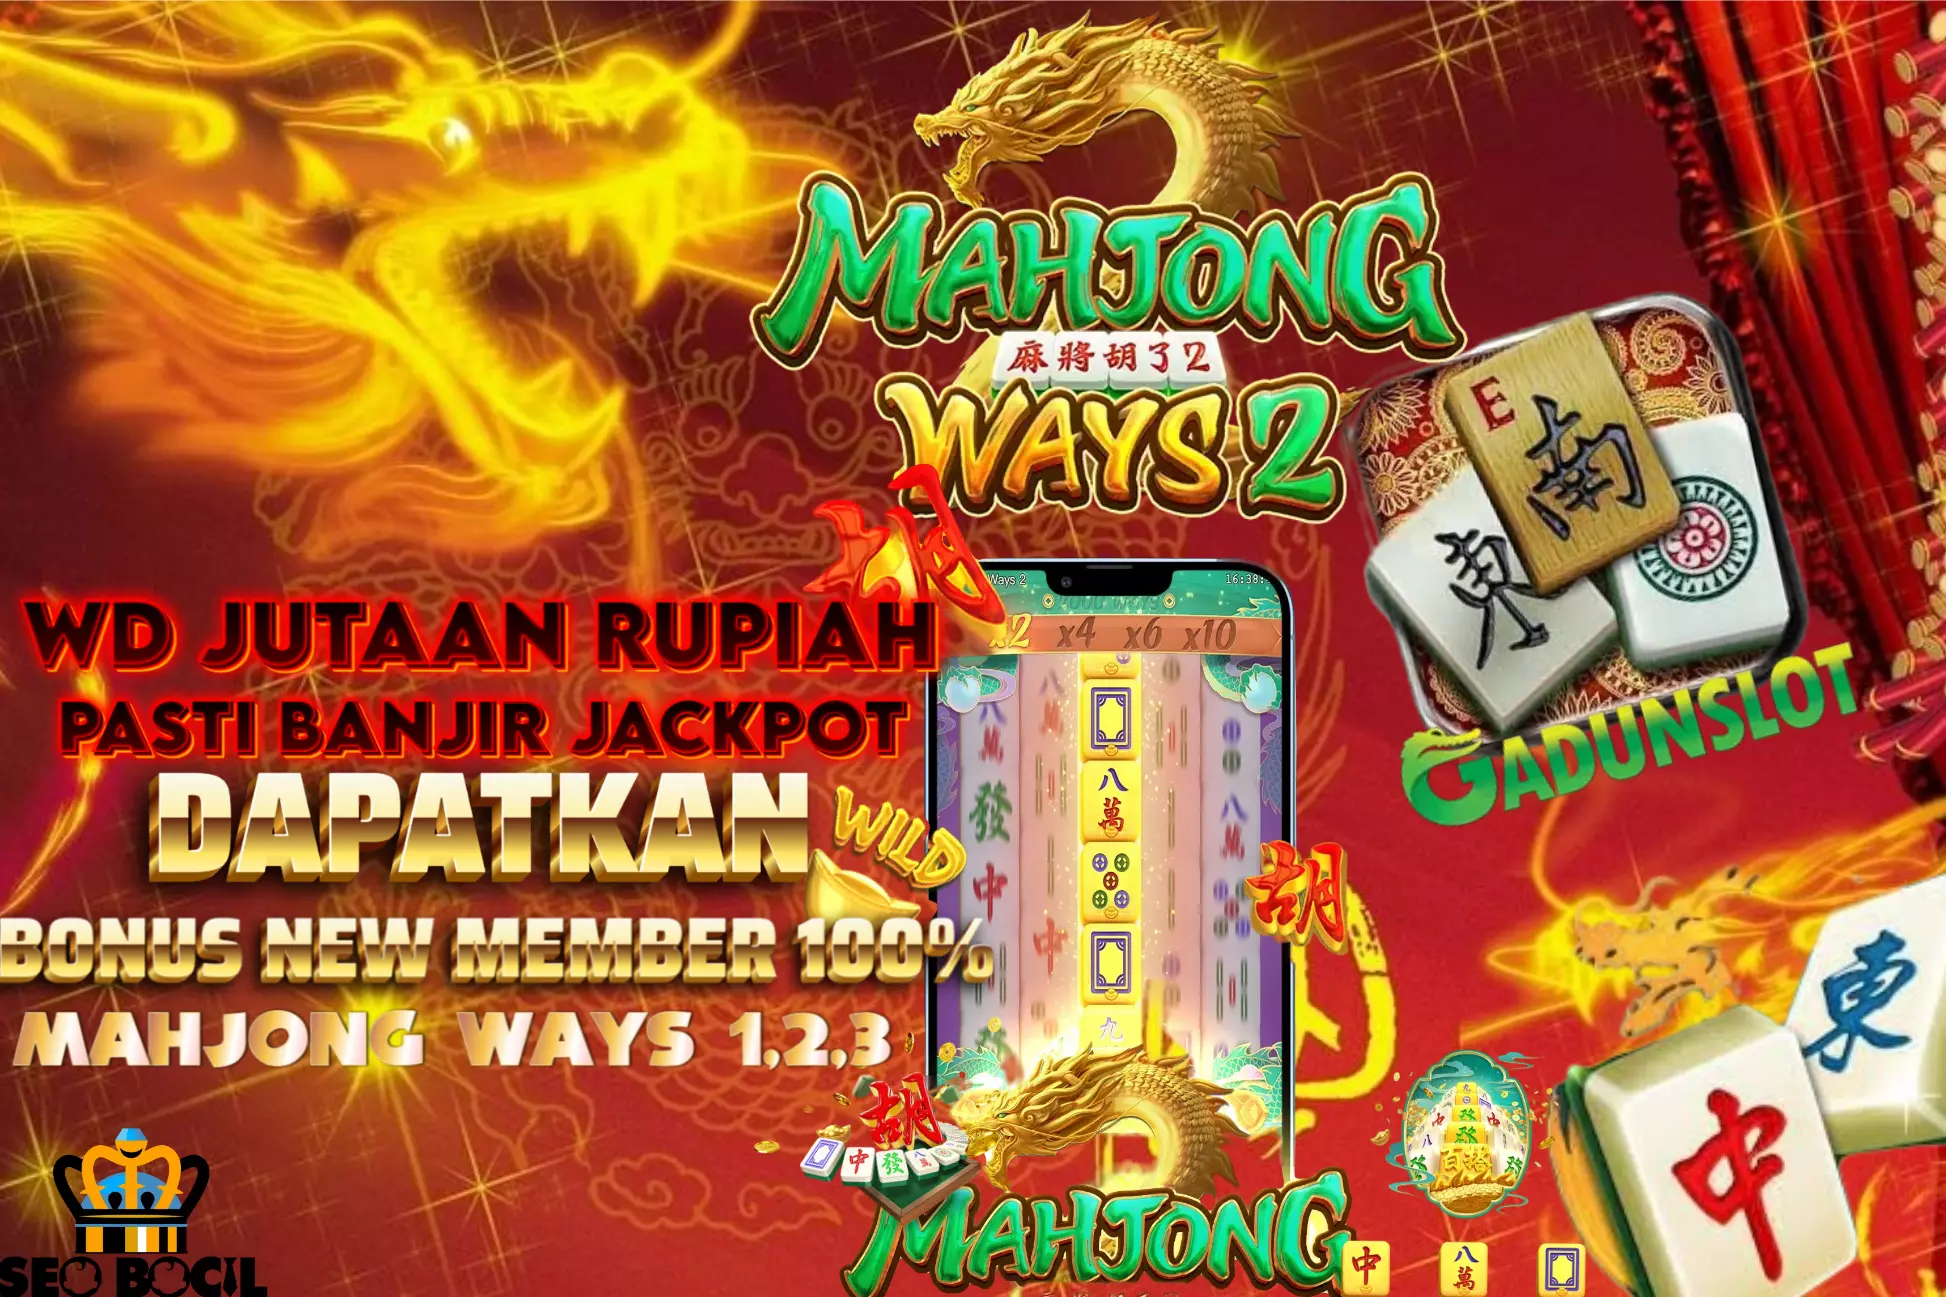 Mahjong Ways 1,2,3 🀄️ Daftar Situs Link Mahjong Slot Terpercaya